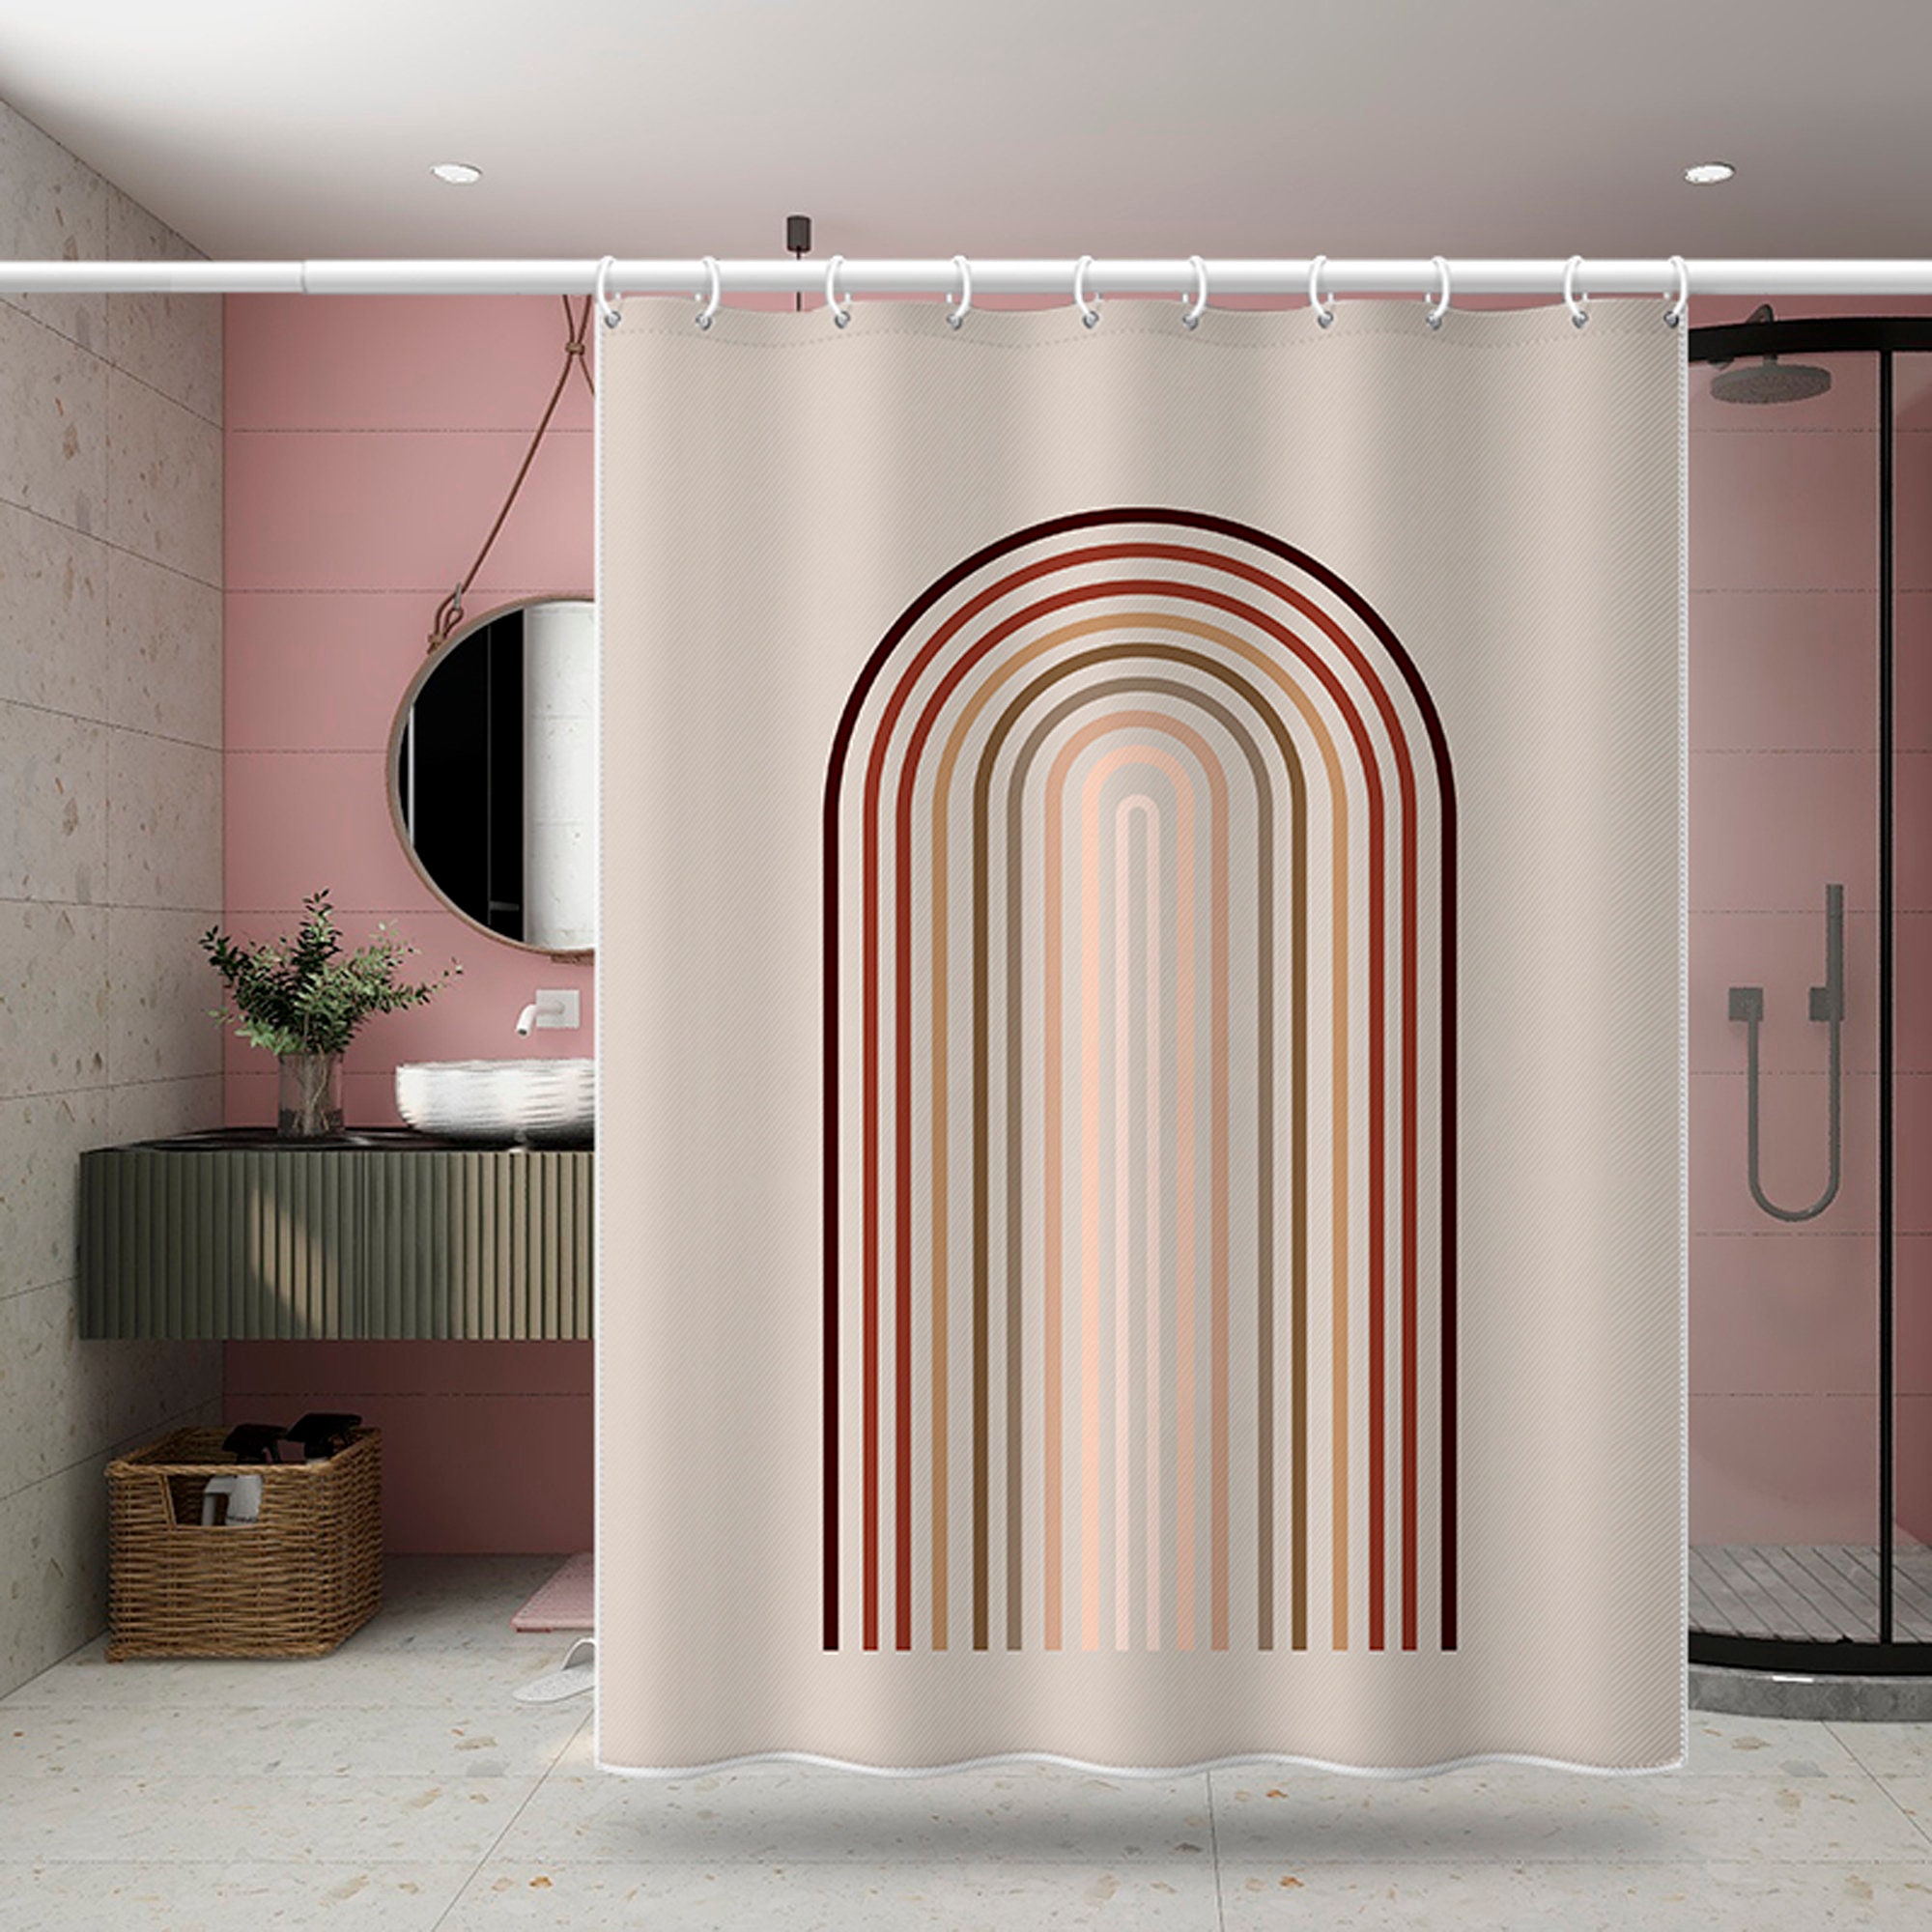 79*71" Bathroom Shower Curtain Polyester Fabric Waterproof Nature Decor 12 